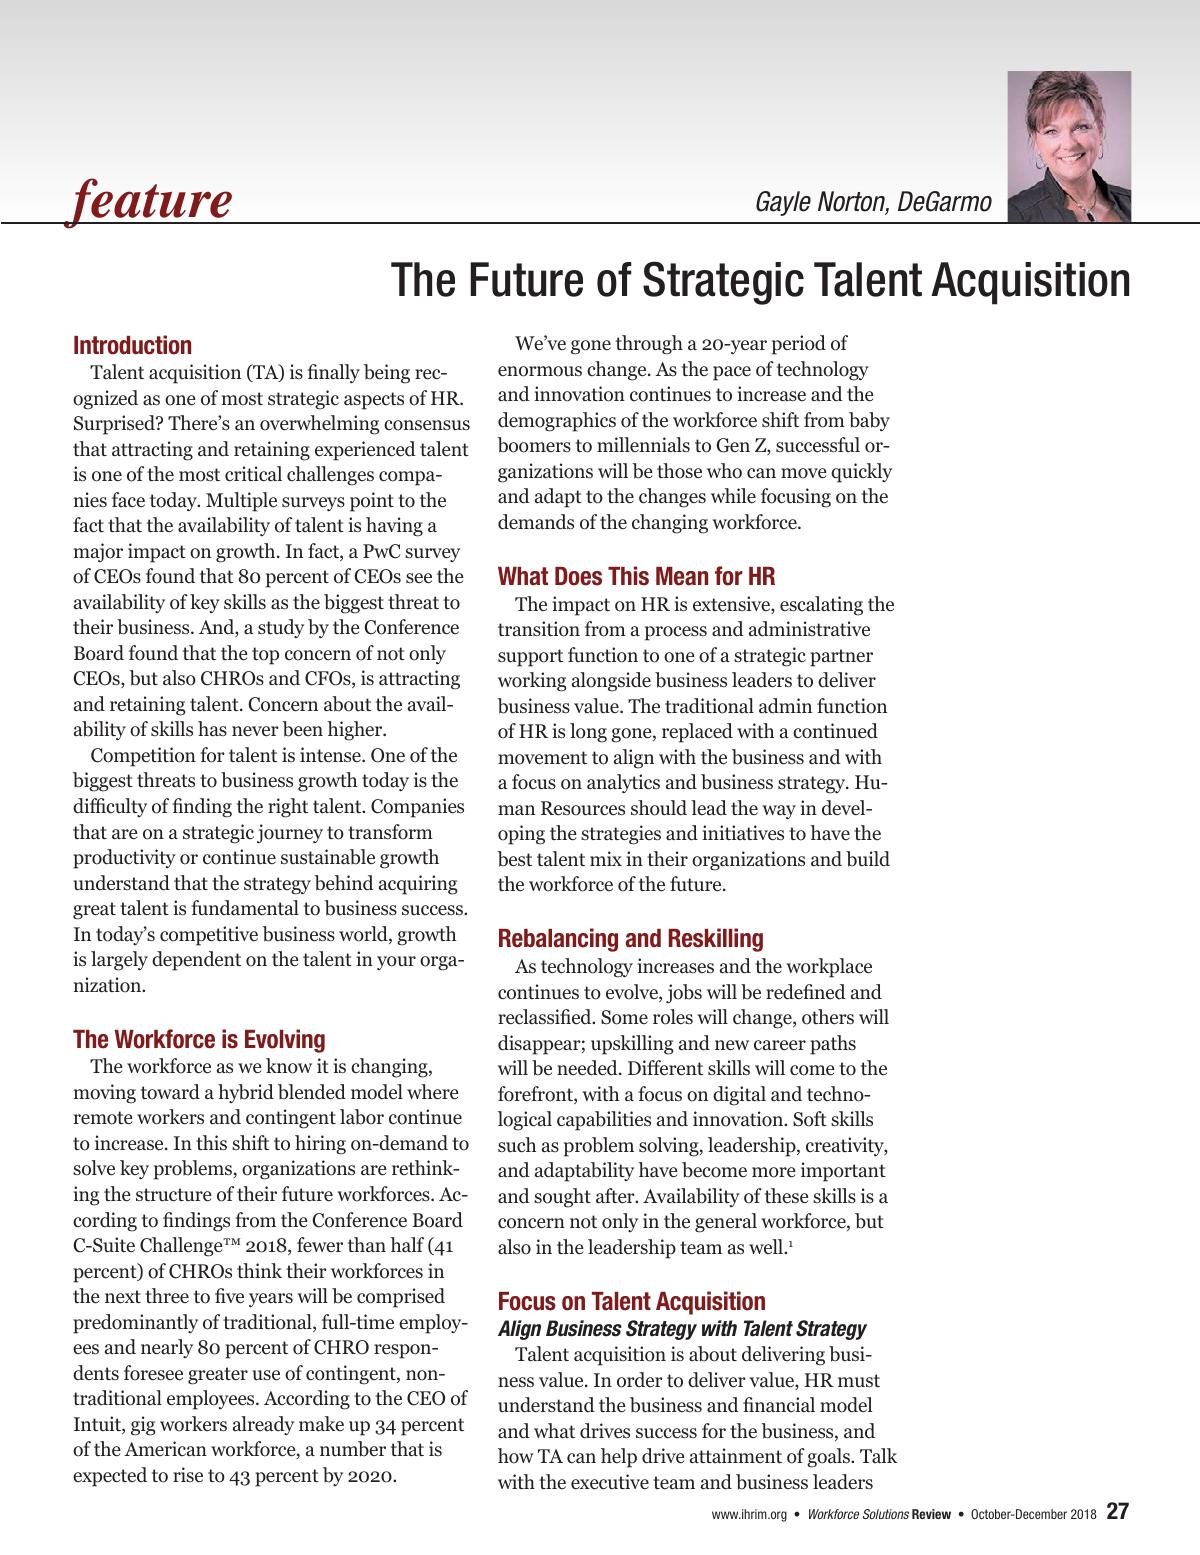 The Future of Strategic Talent Acquisition